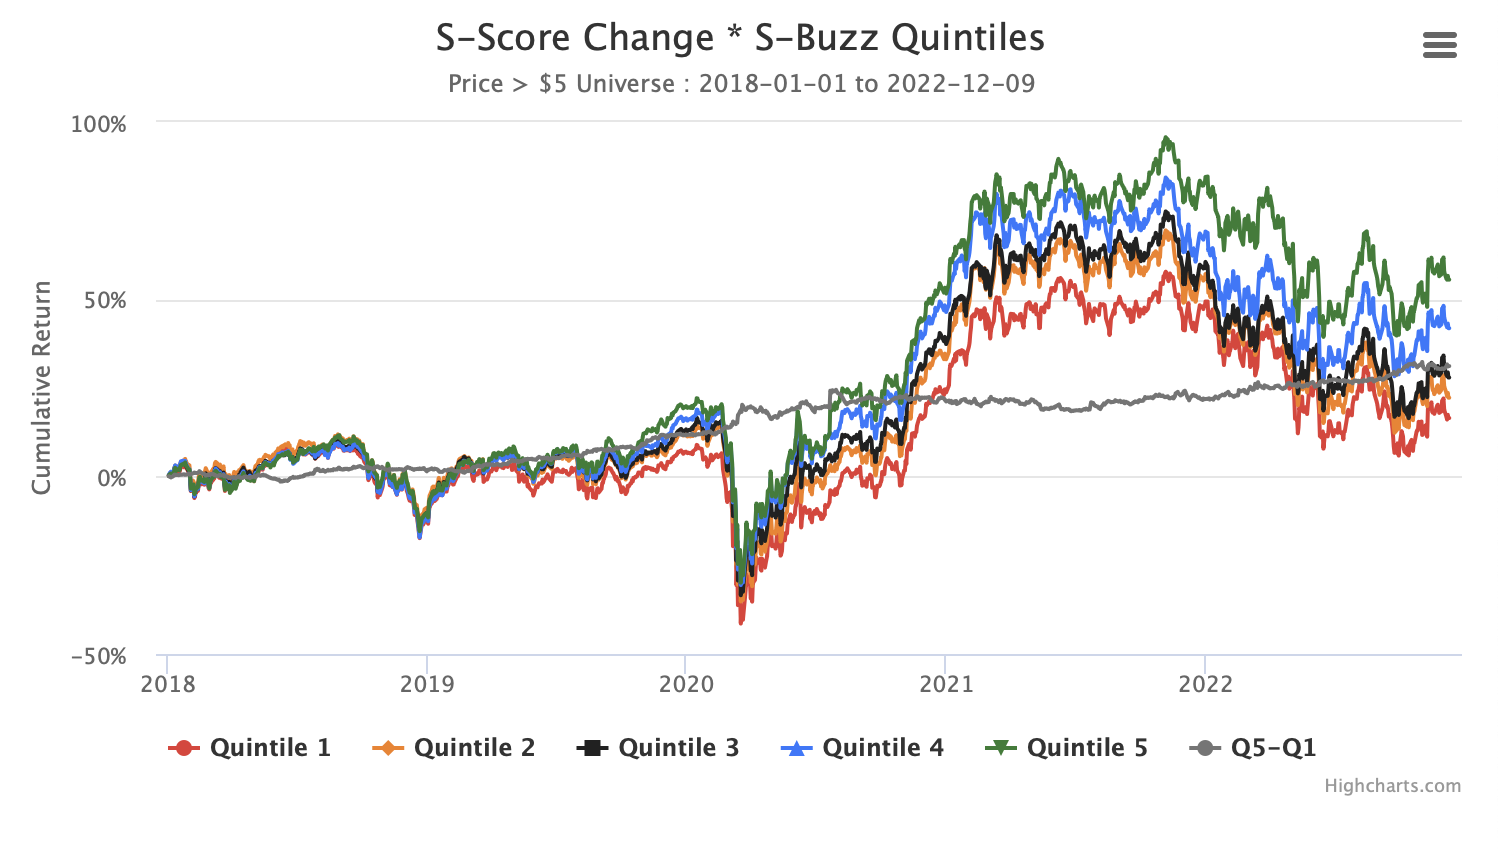 S-Score * S-Buzz Quintiles